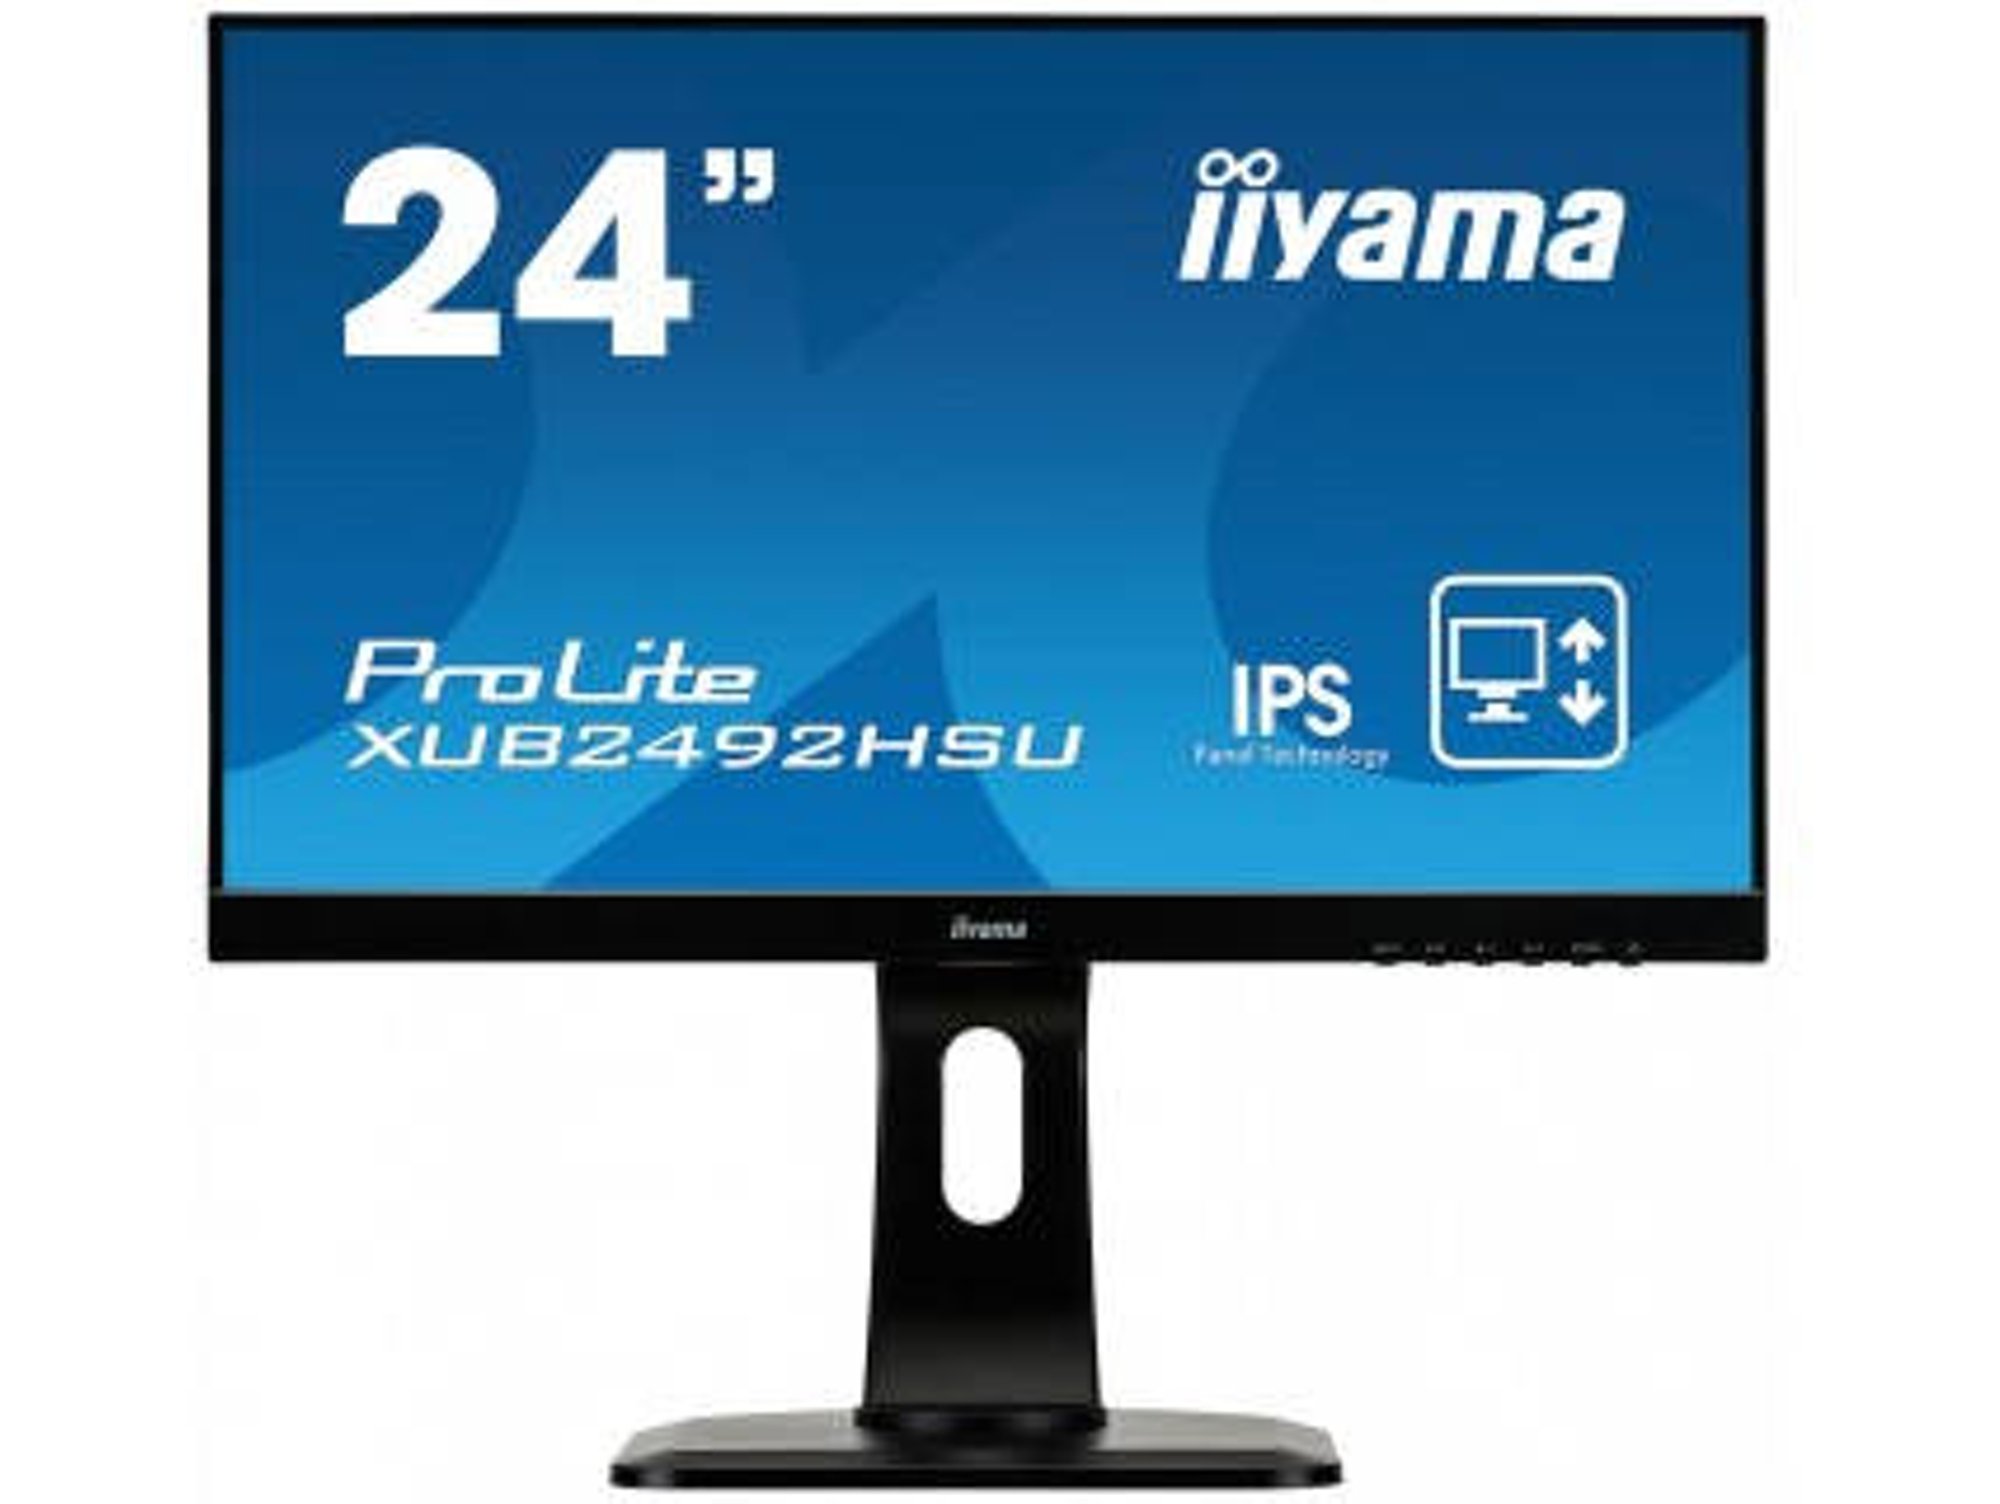 Iiyama Xub2492hsub1 Monitor ips led 60.5 cm 23.8 pulgadas fullhd vga hdmi displayport usb2.0 ultraslimline regulable en altura pivotante 24